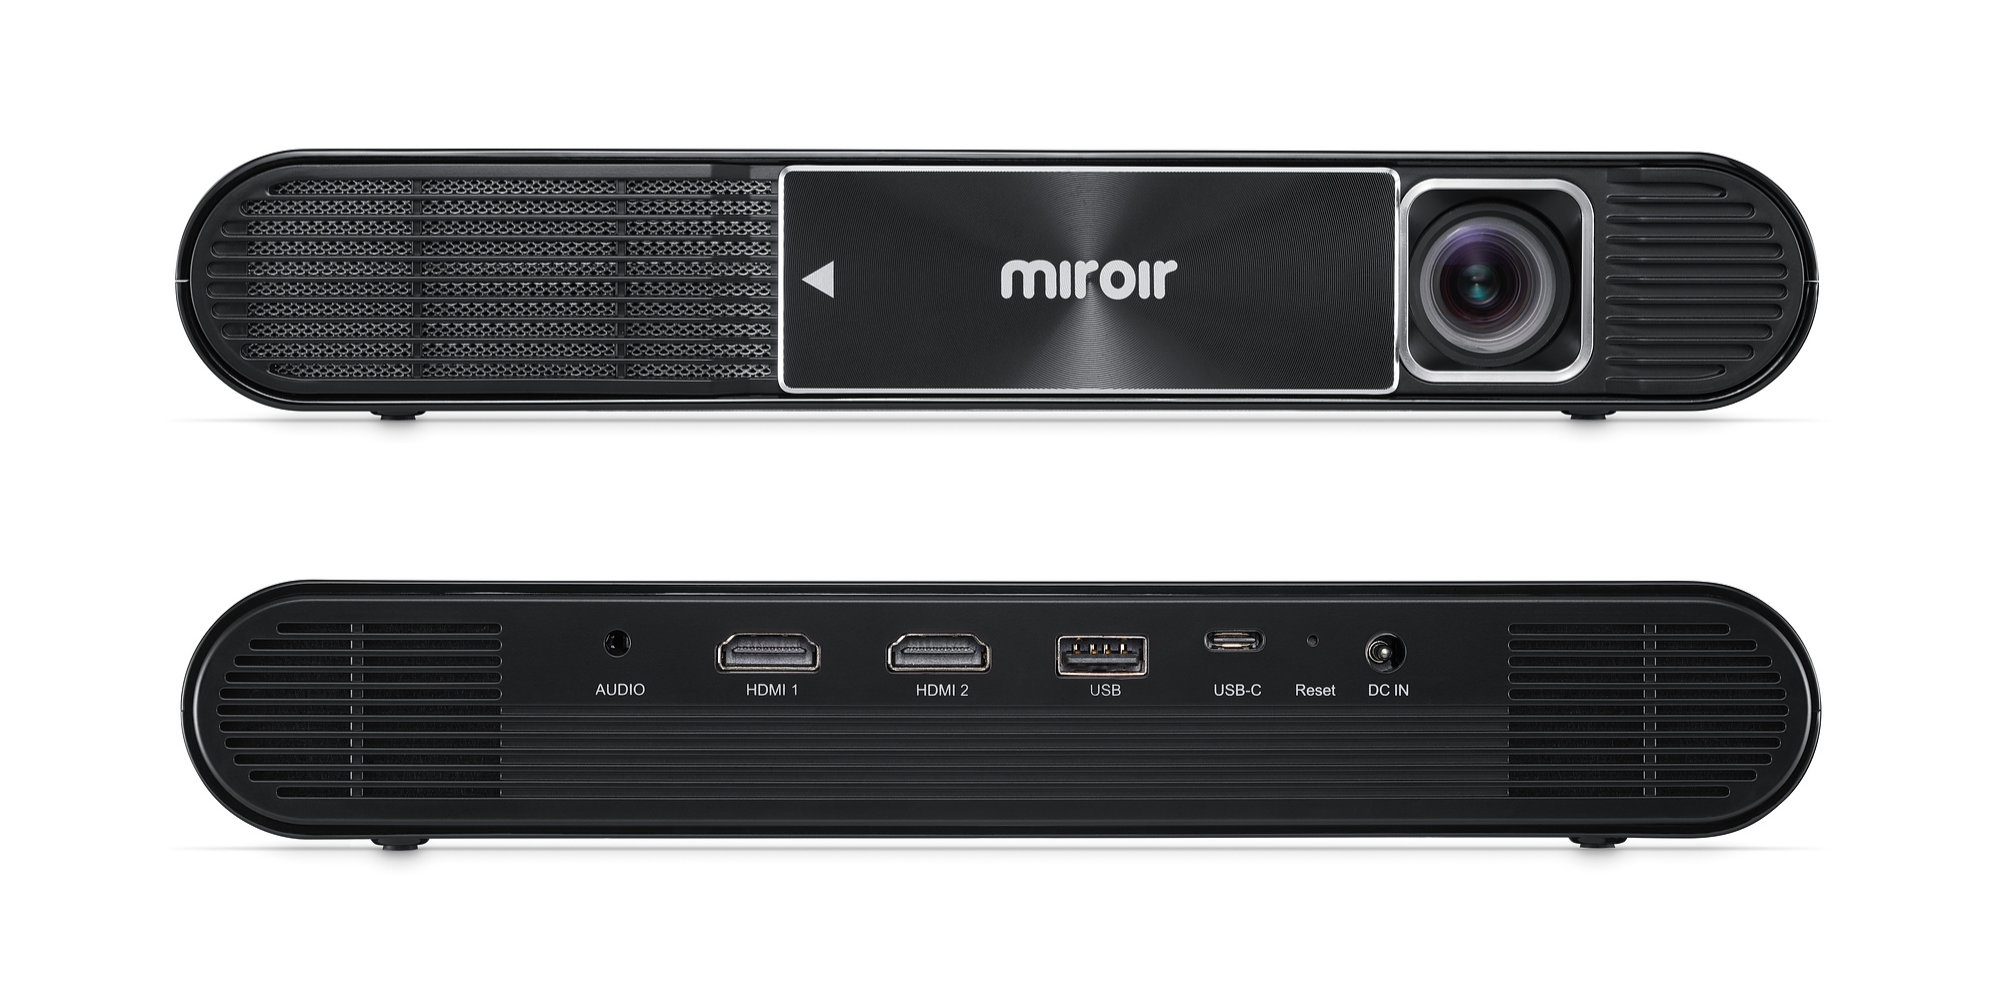 miroir micro projector mp 30